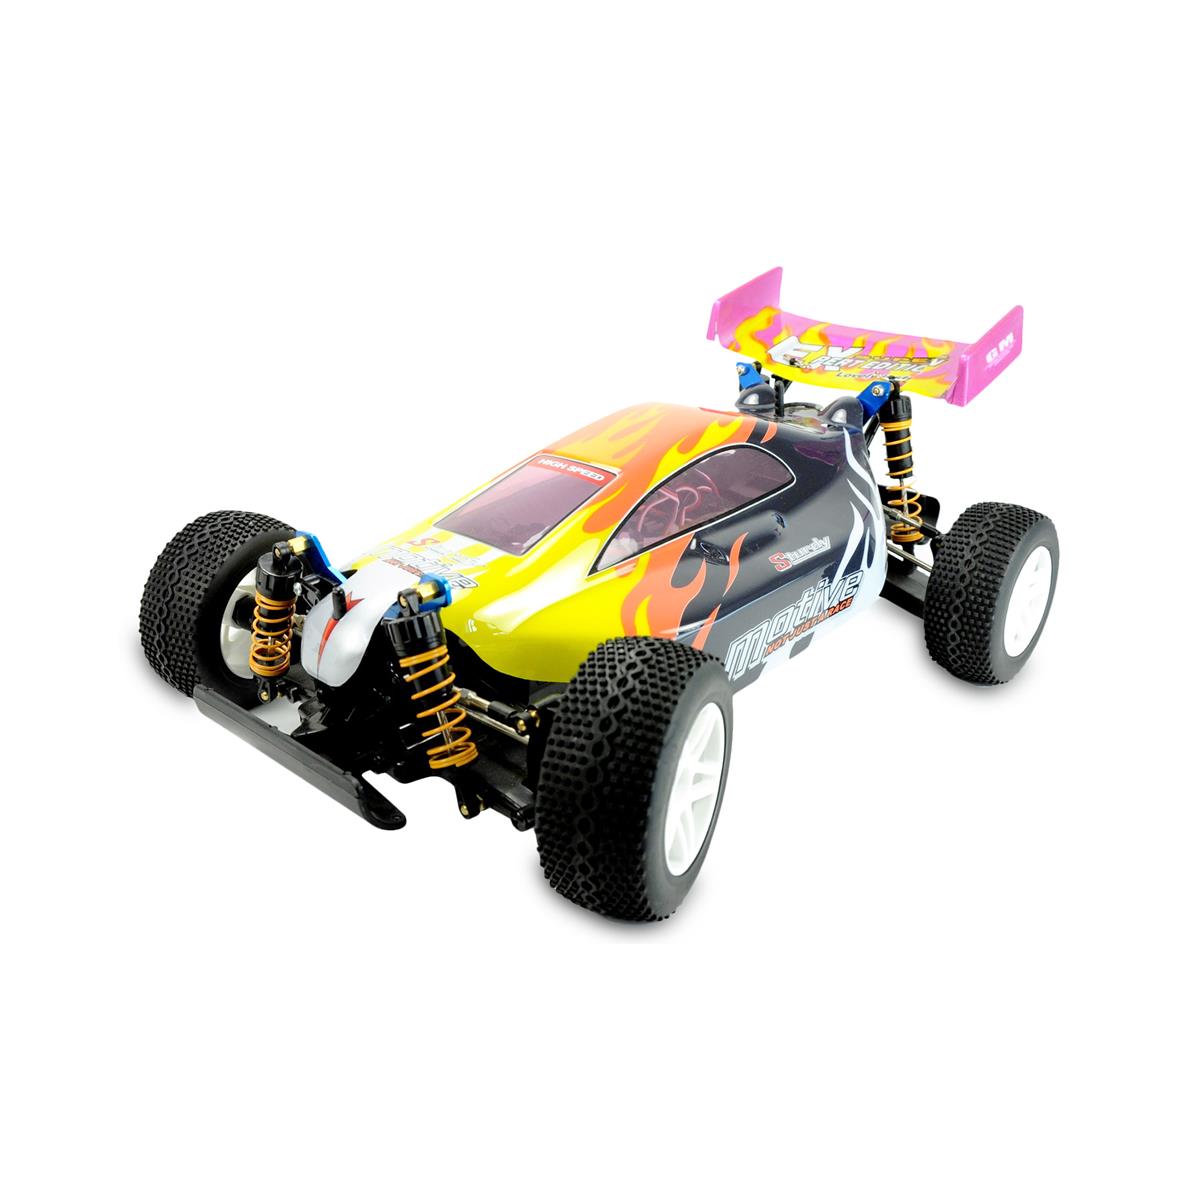 https://rc-fun-car.de/media/image/c7/dc/49/Thunderburst_2007G_Brushed_1_10_4WD_RTR_Amewi_rc_modellbau_RC-22125_rc-fun-car.jpg